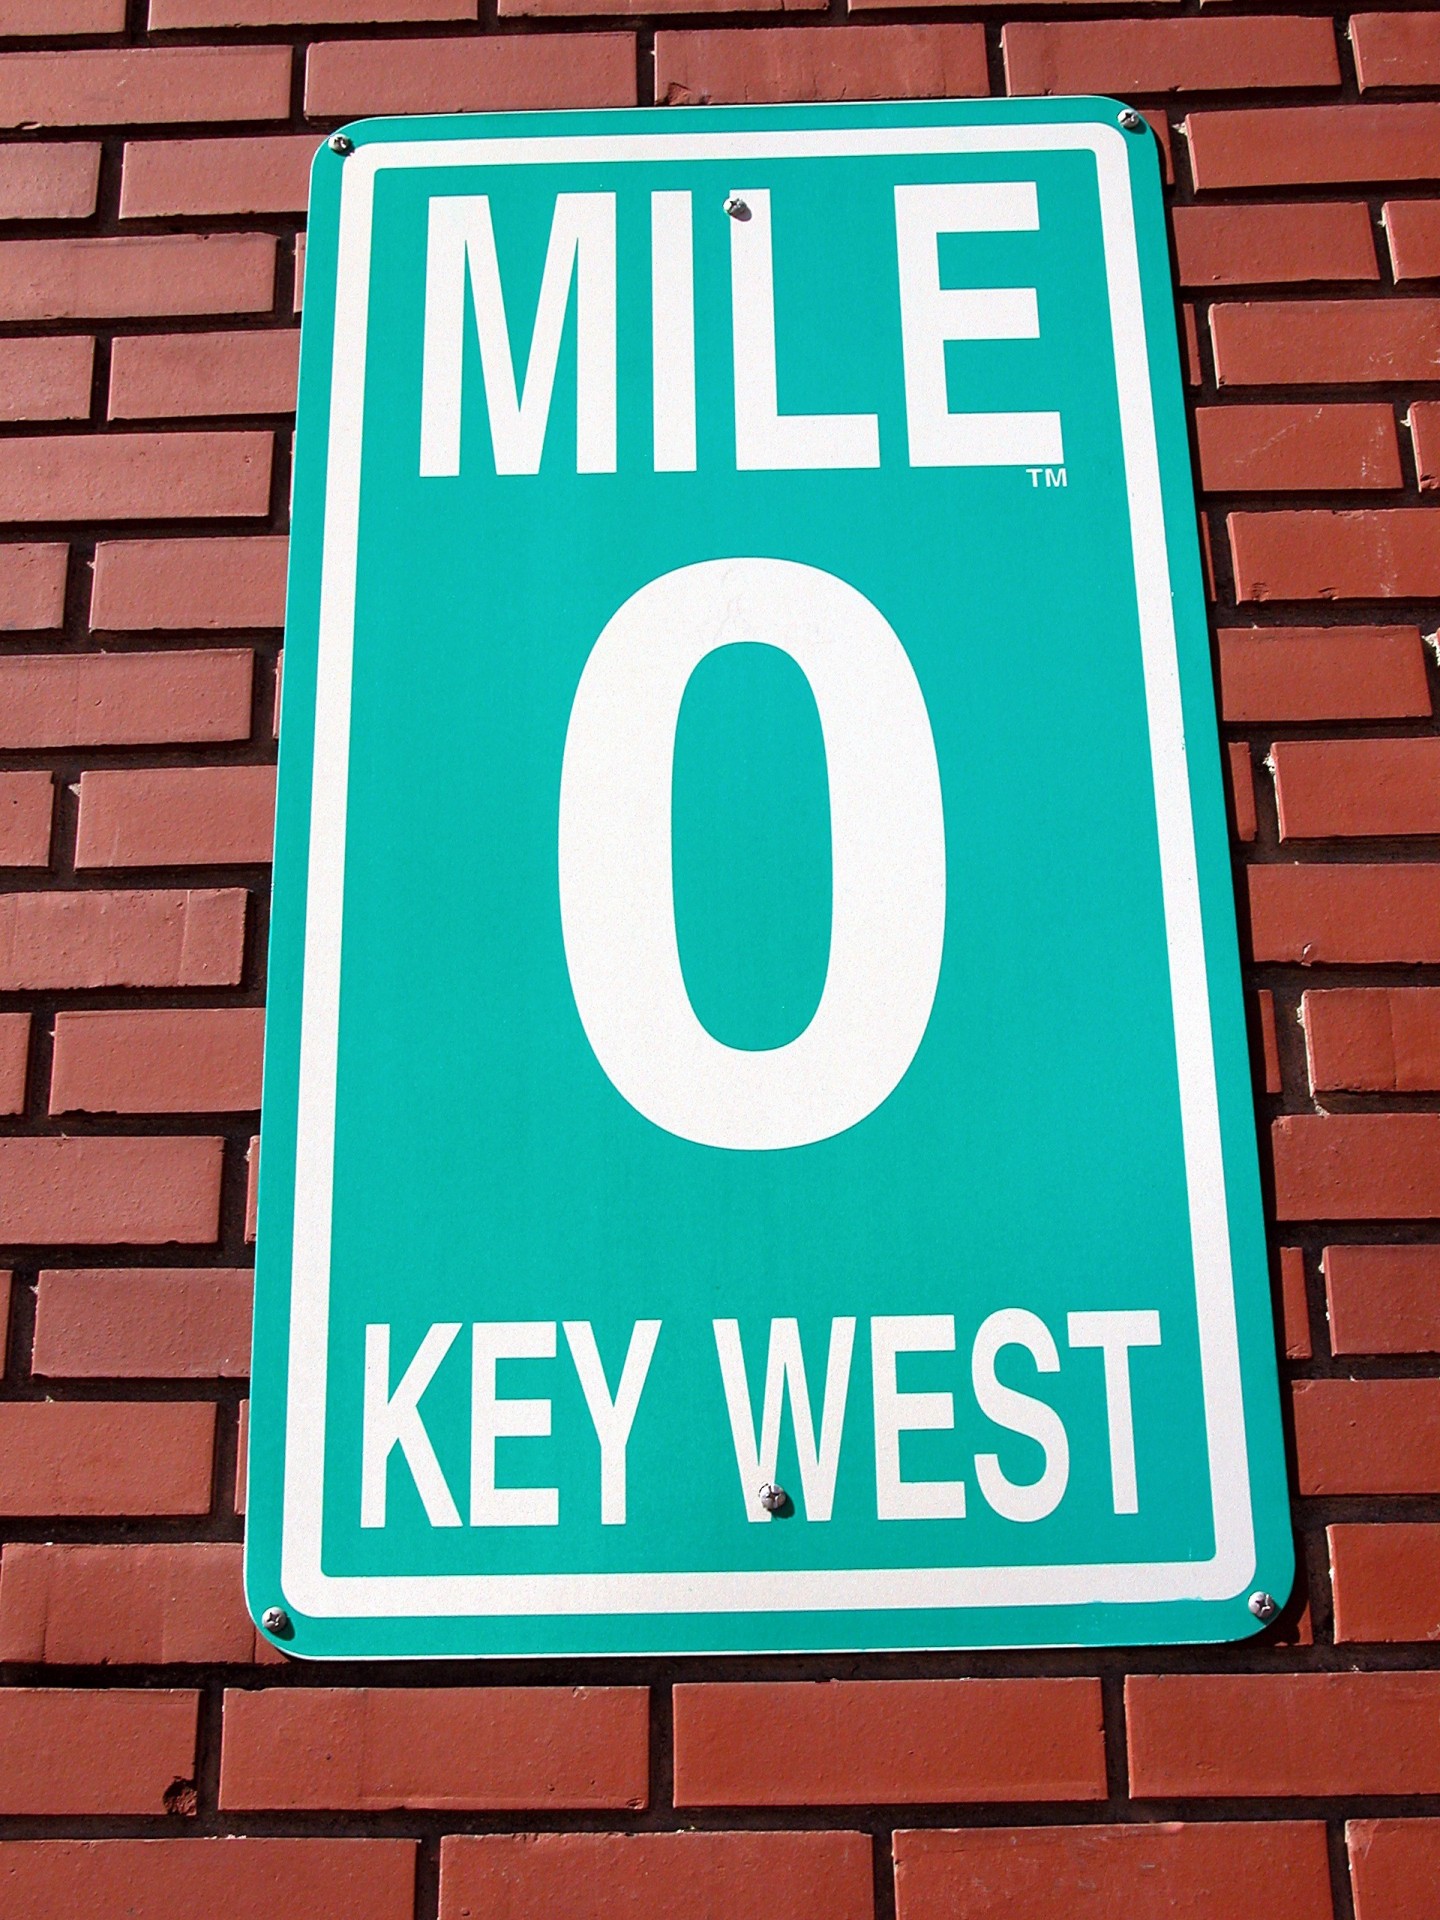 Edit free photo of Key,west,sign,marker,mile - needpix.com